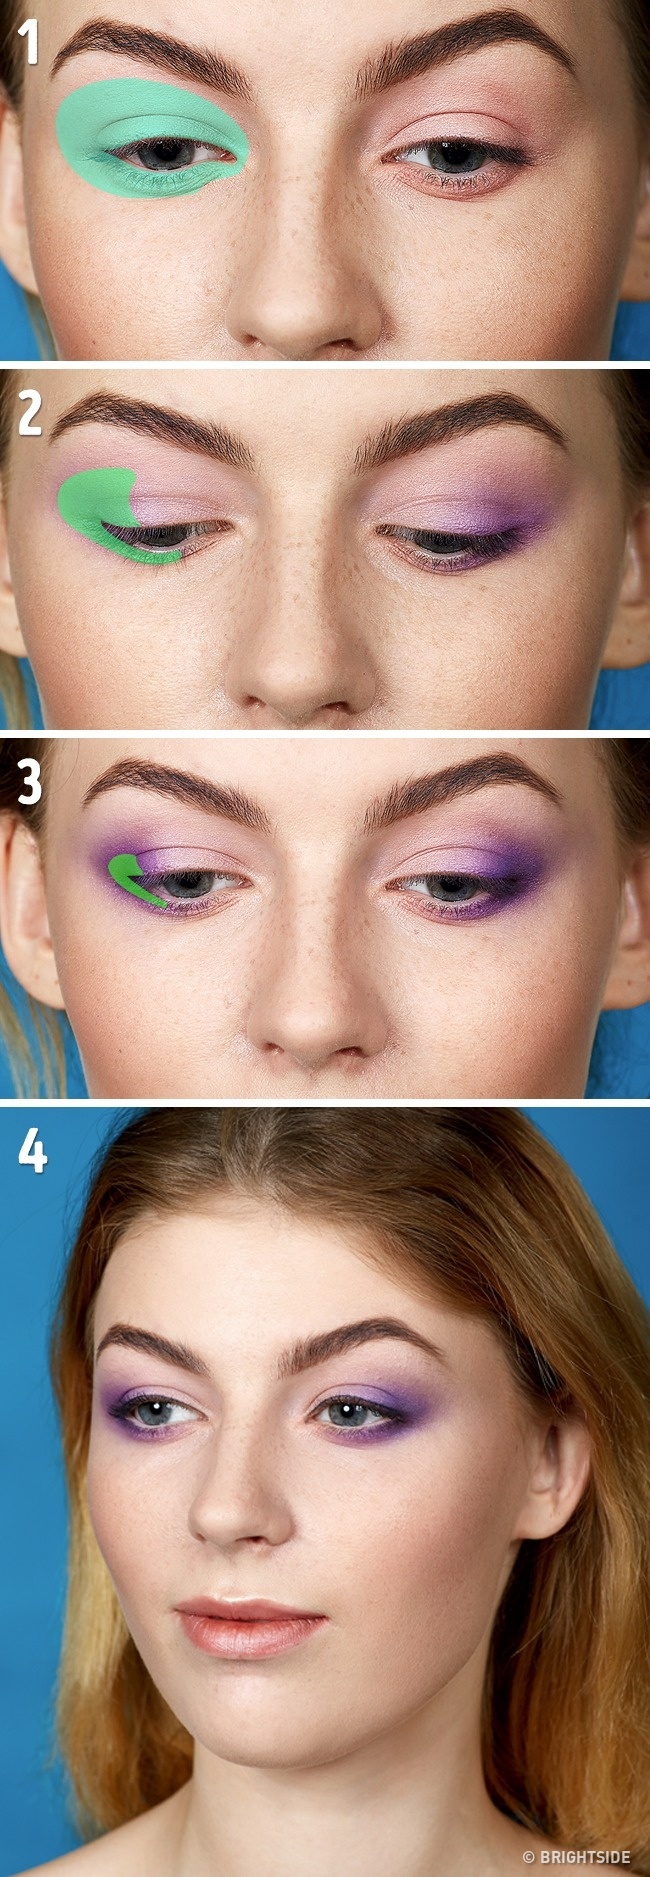 vertikalna tehnika 5 ključnih tehnika šminkanja koje treba da savladaš